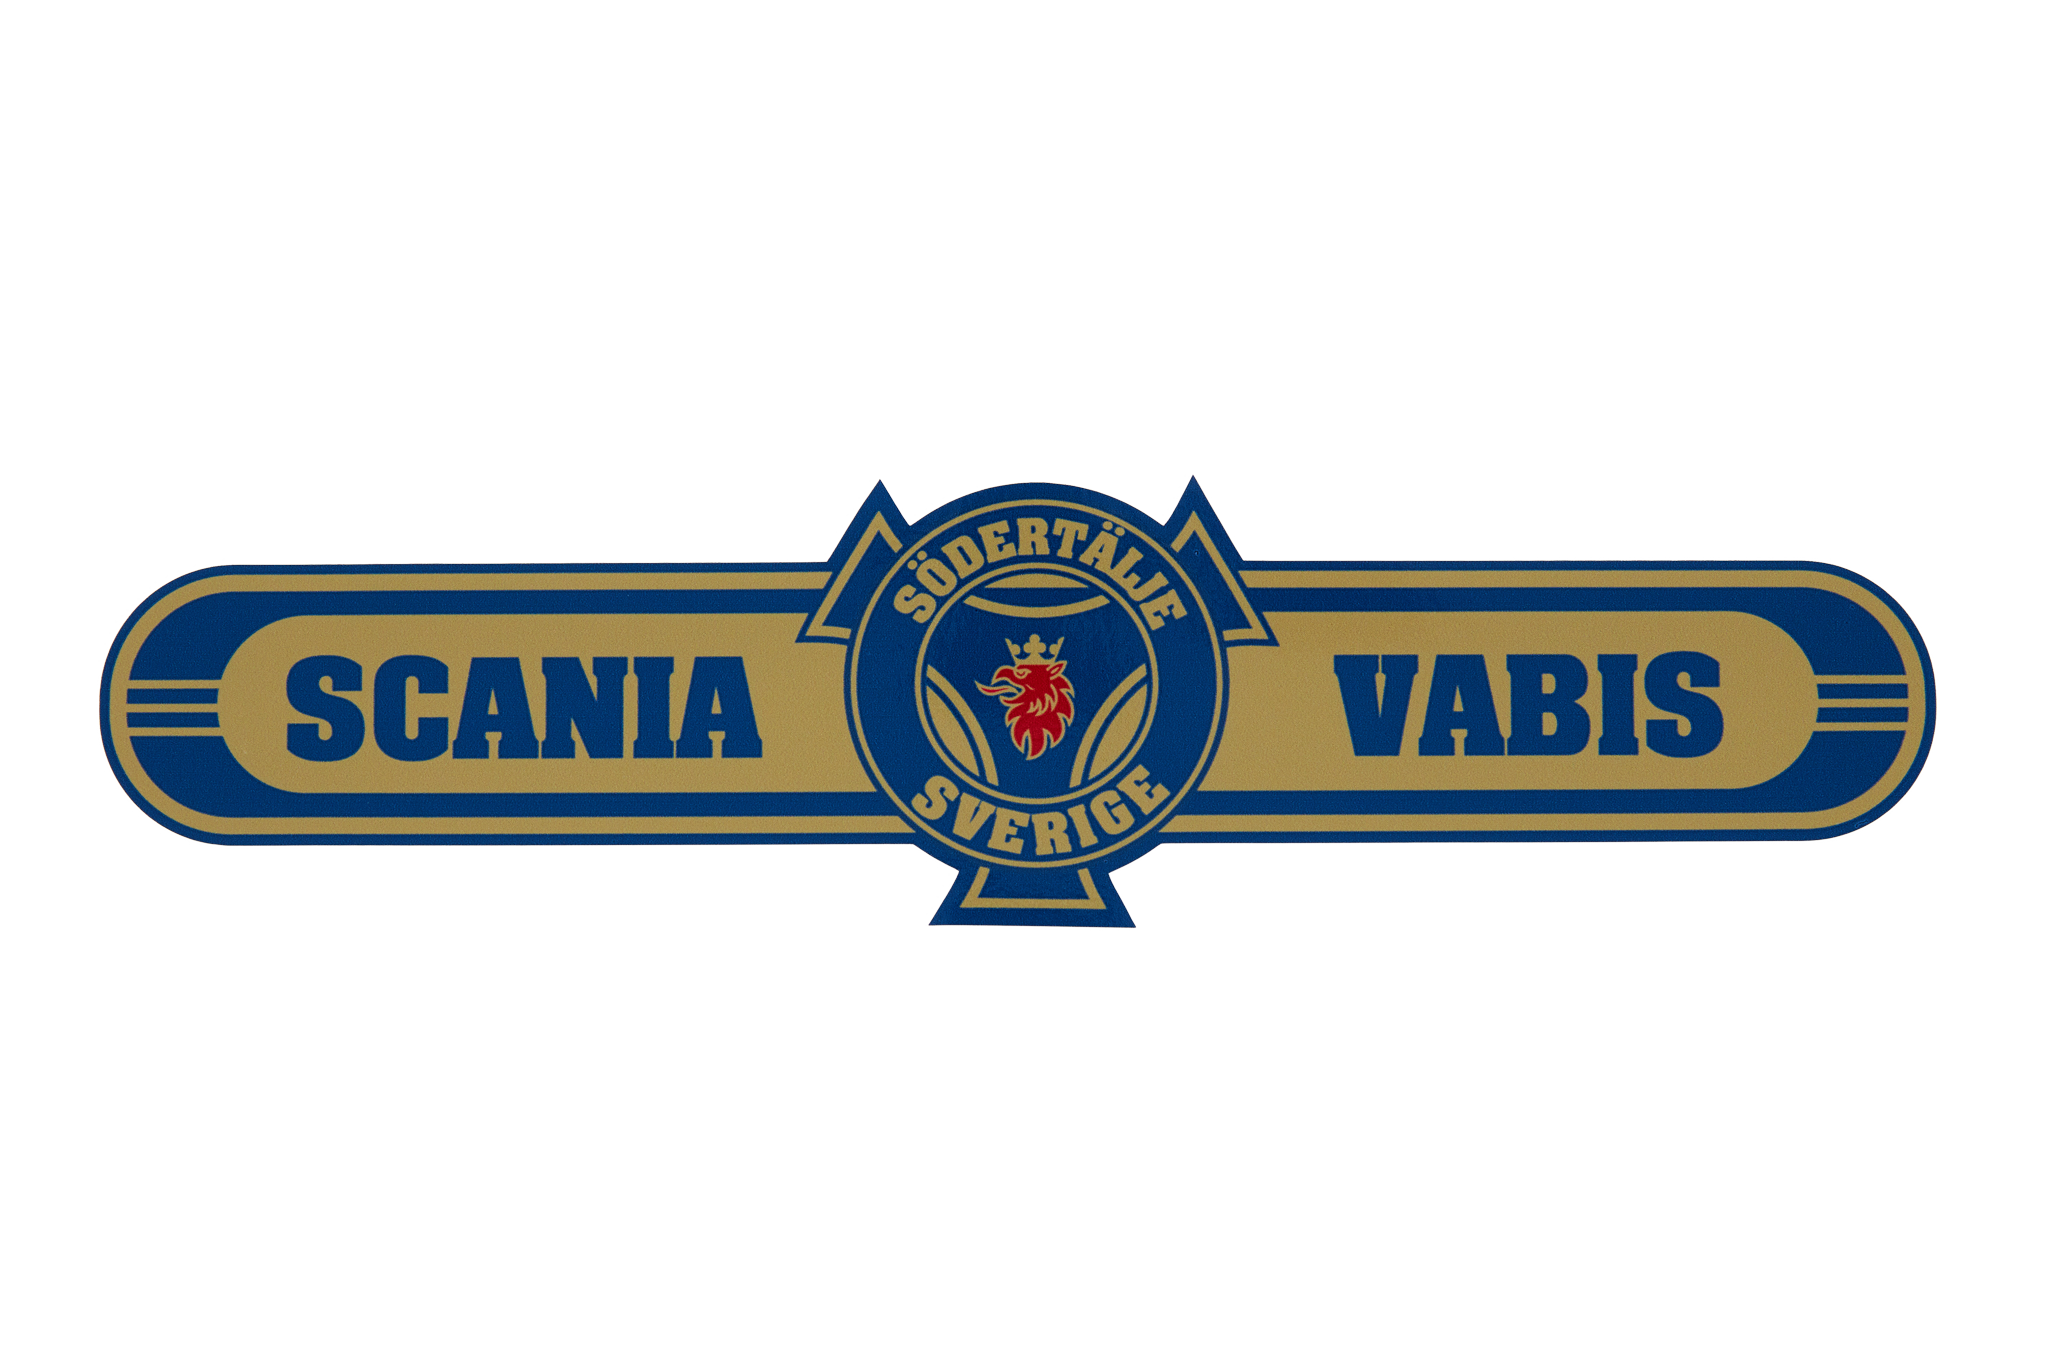 🔥 Free download Scania Logo Wallpaper Brands Wallpaper Background Photo  [1920x1080] for your Desktop, Mobile & Tablet | Explore 74+ Scania  Wallpapers, Scania Wallpapers, Scania Wallpaper, Scania Trucks Wallpapers